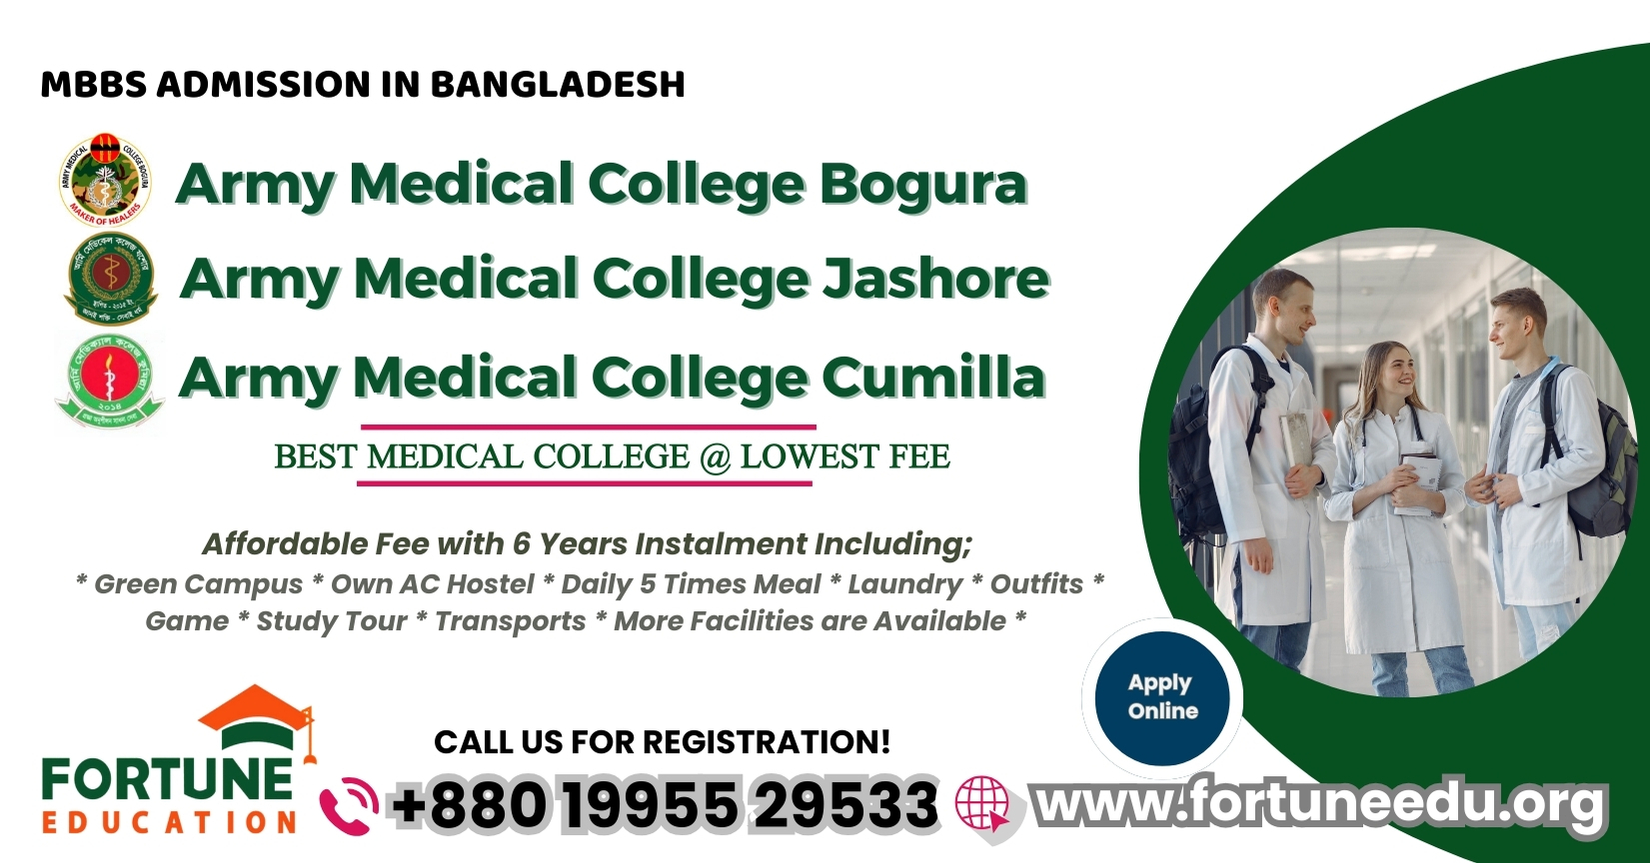 Facilities at Army Medical Colleges in Bogura, Cumilla, and Jashore